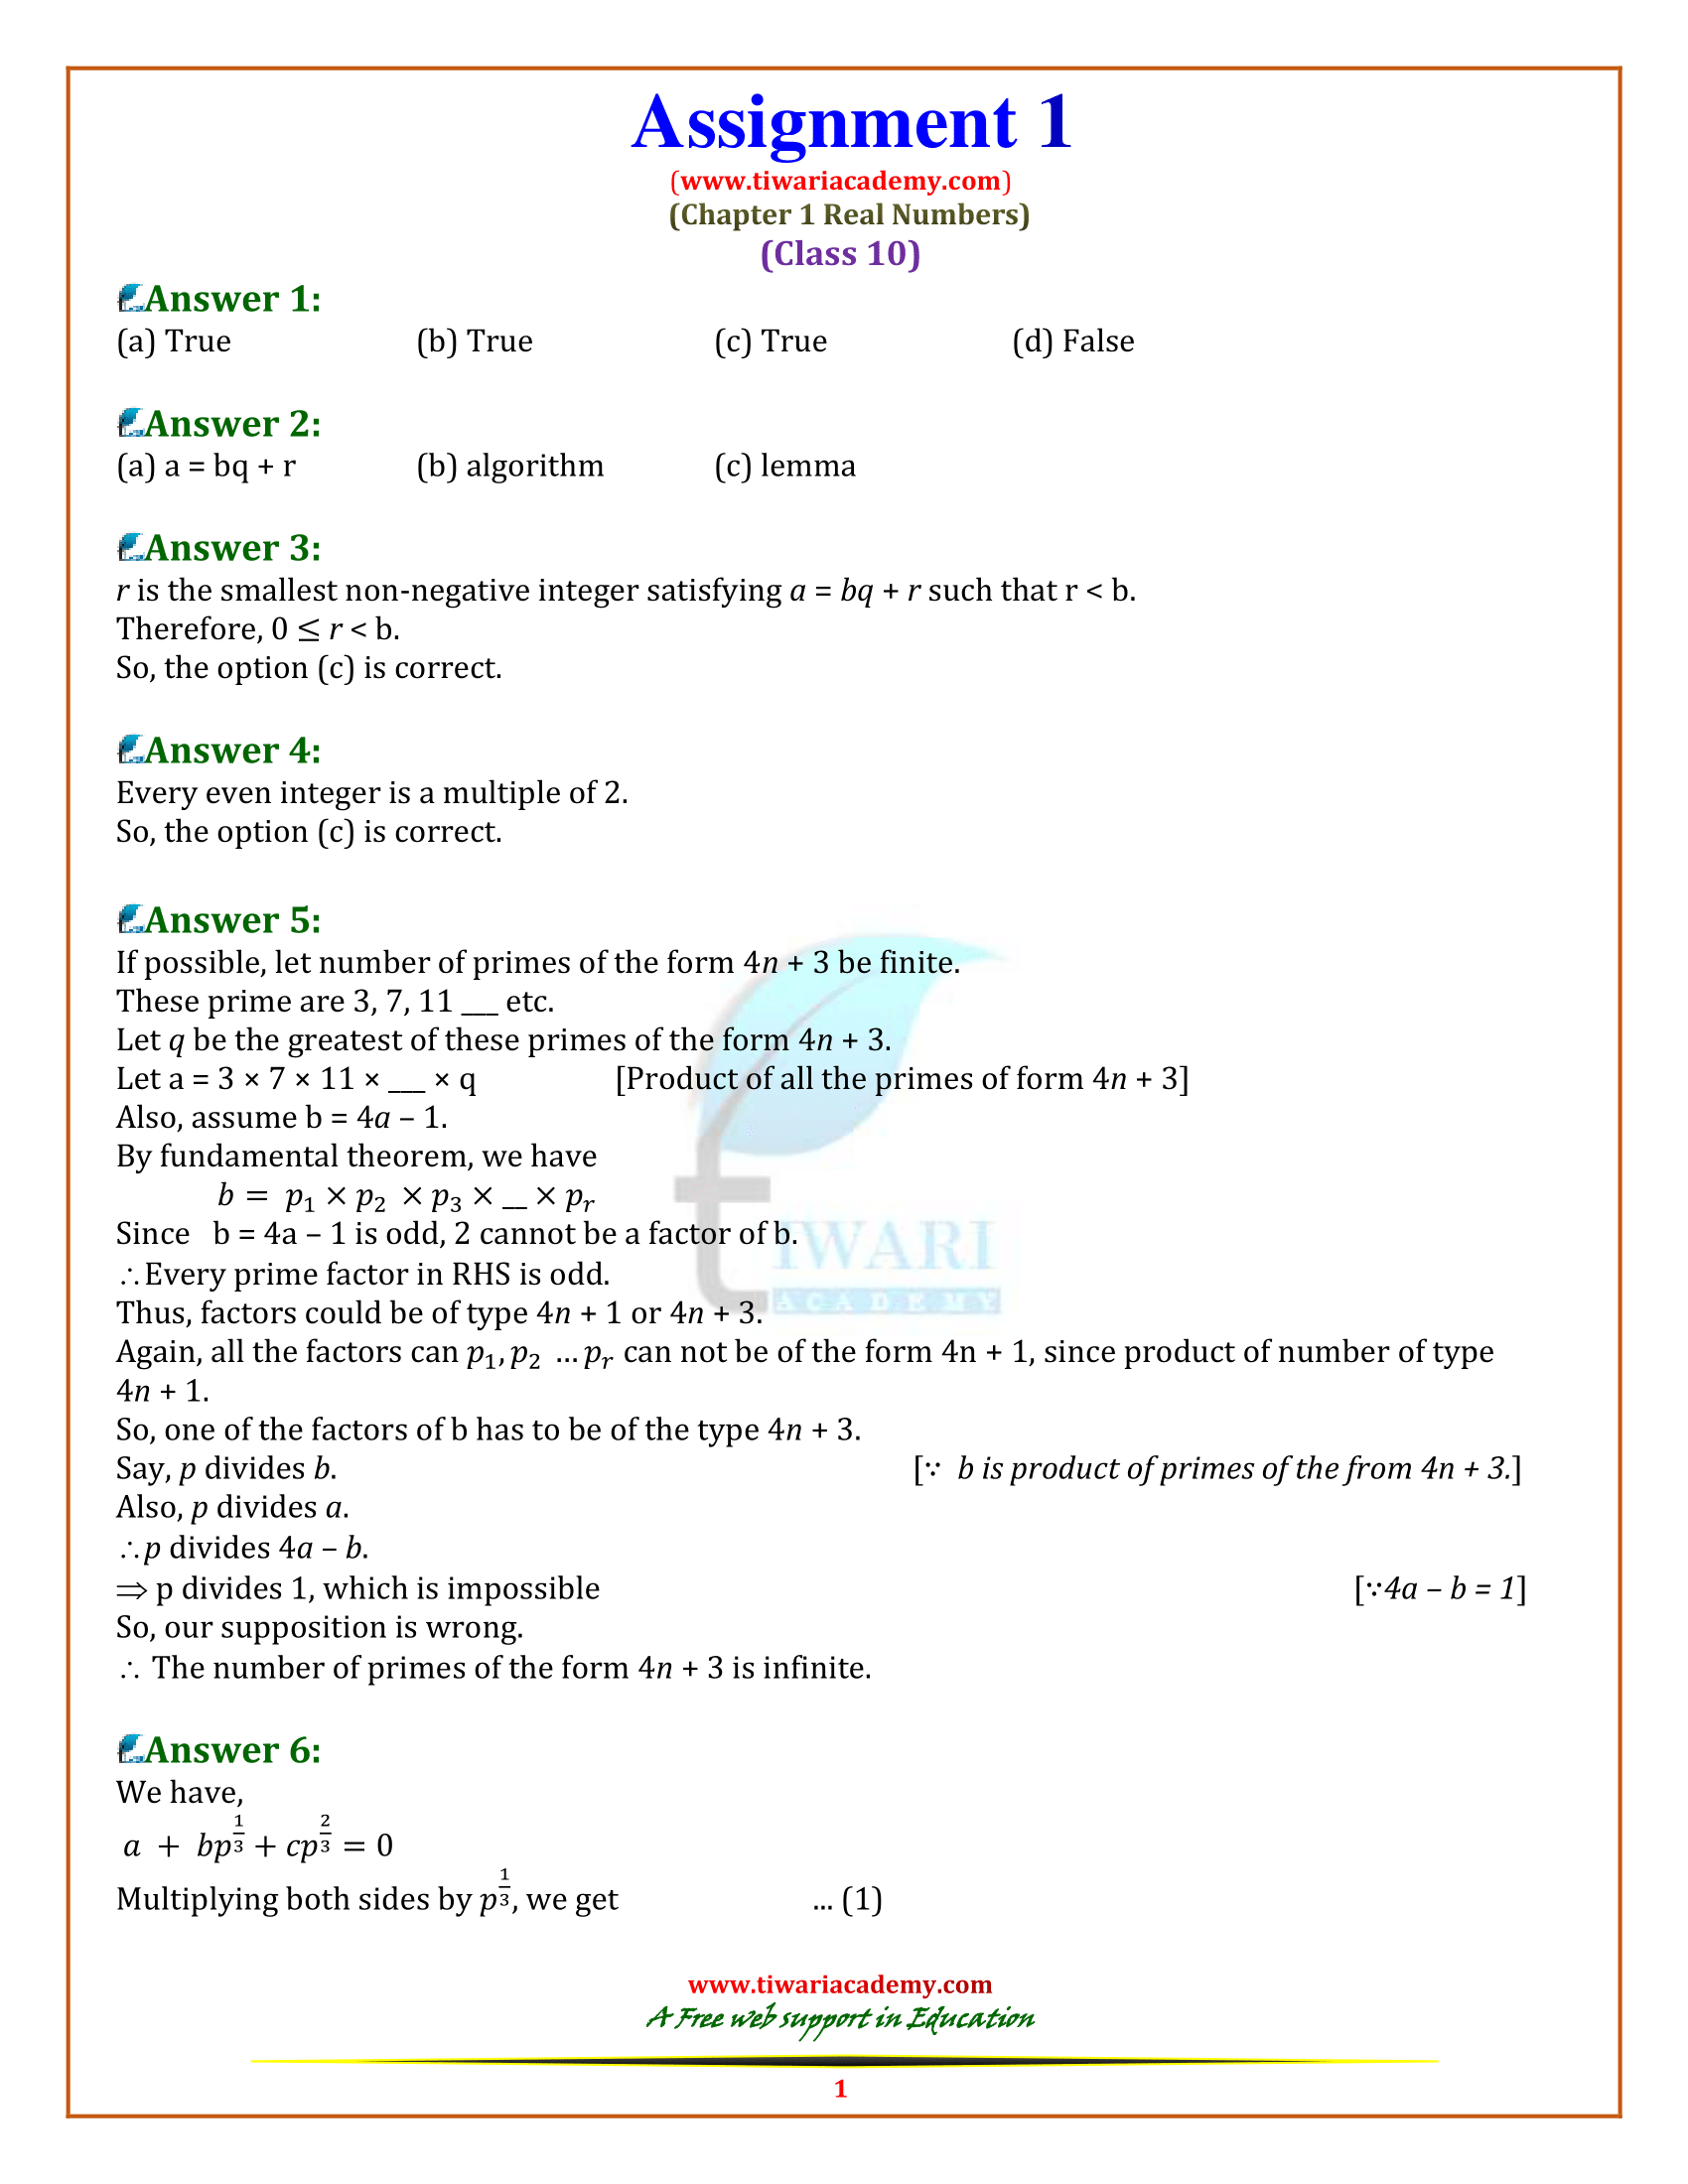 cbse-ncert-class-10-maths-chapter-1-real-numbers-assignments-worksheet